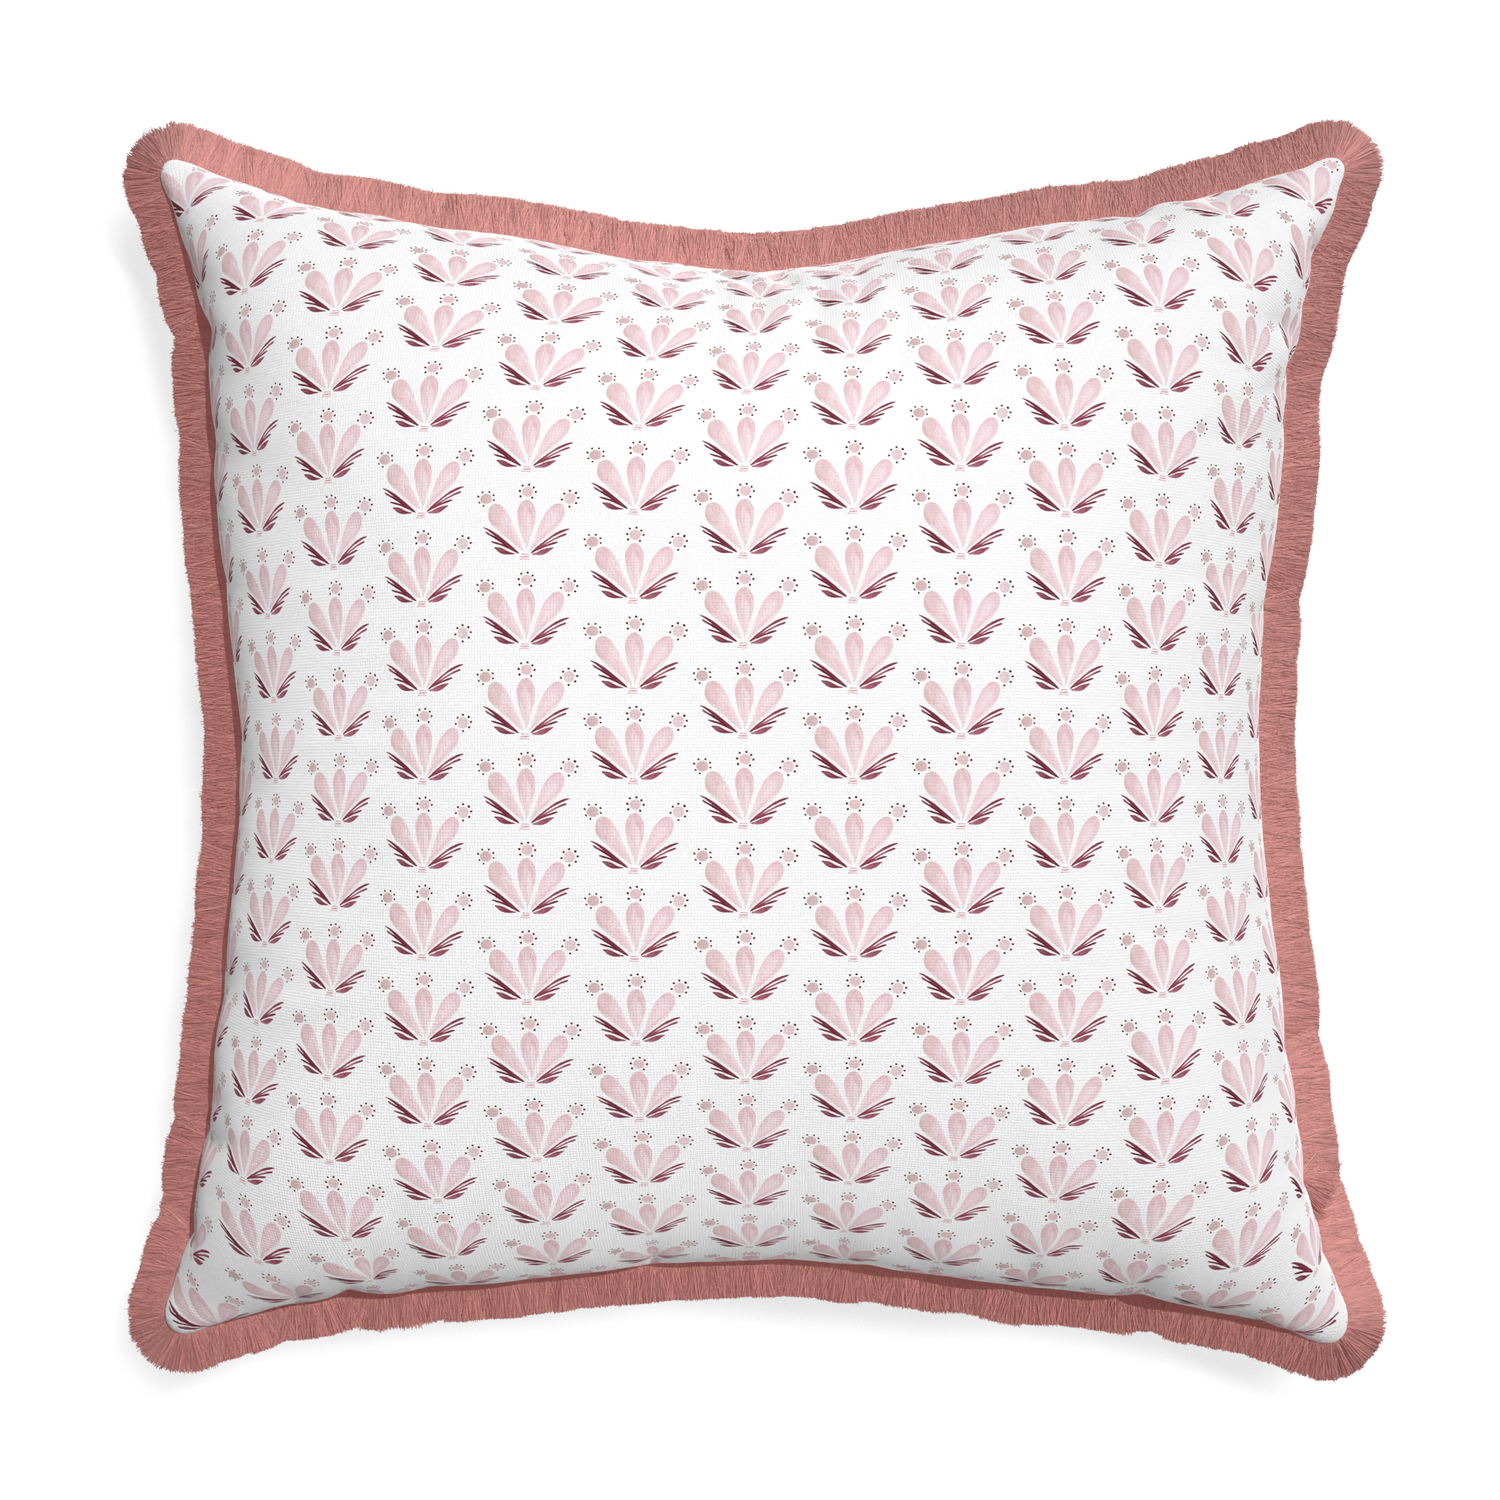 Euro-sham serena pink custom pillow with d fringe on white background